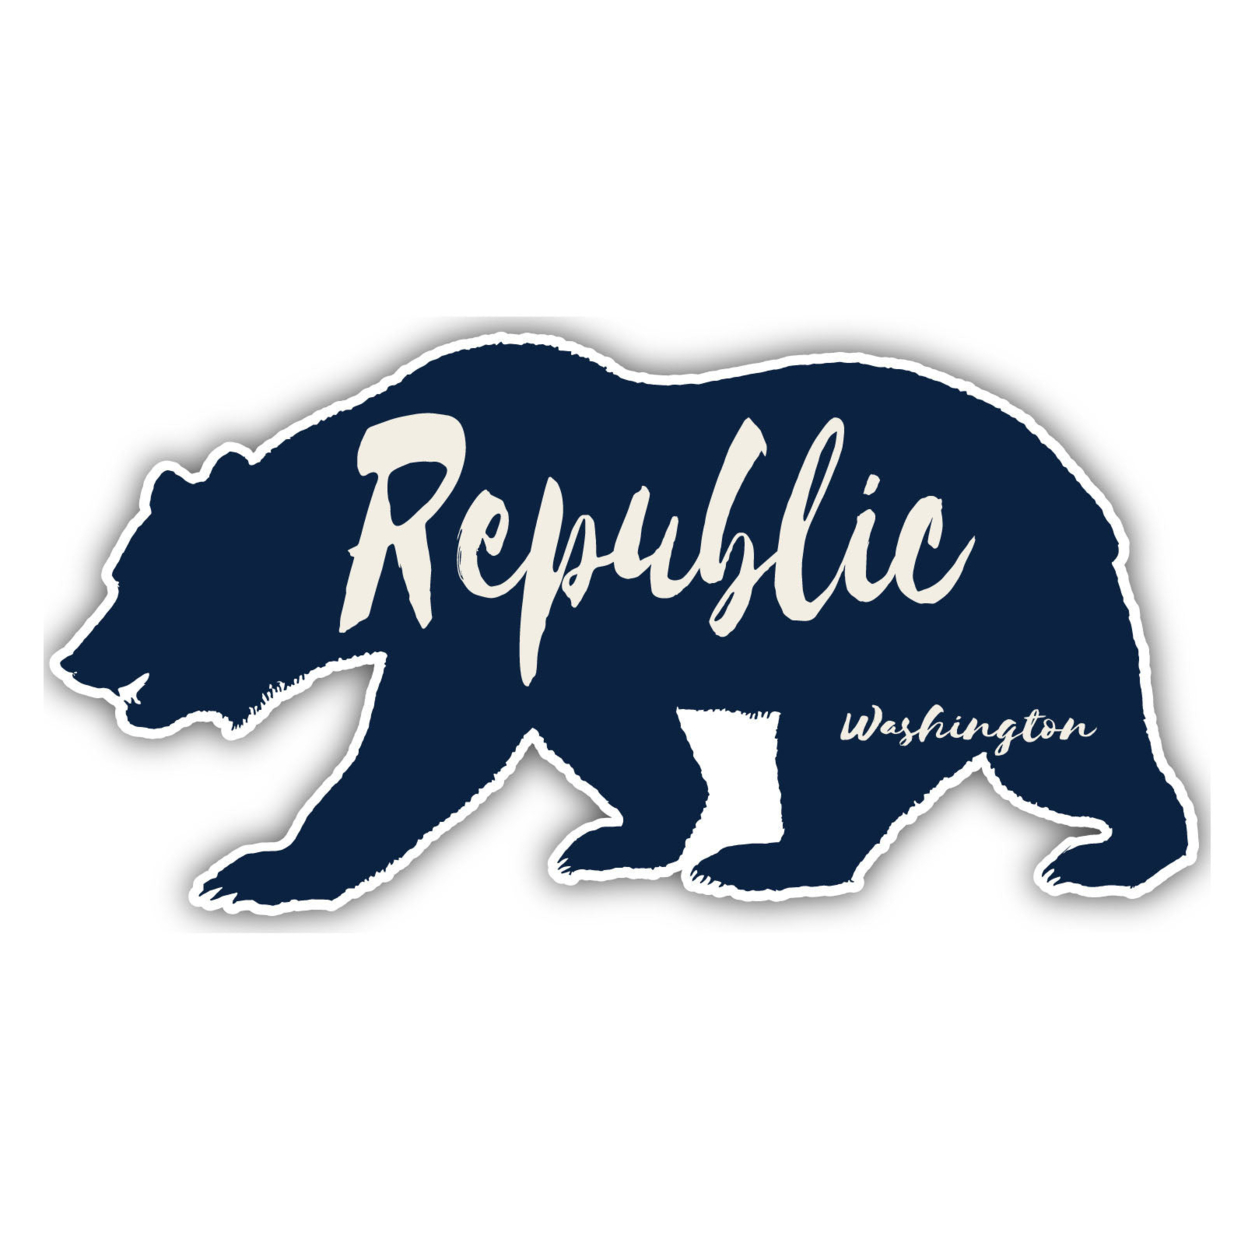 Republic Washington Souvenir Decorative Stickers (Choose Theme And Size) - Single Unit, 4-Inch, Bear